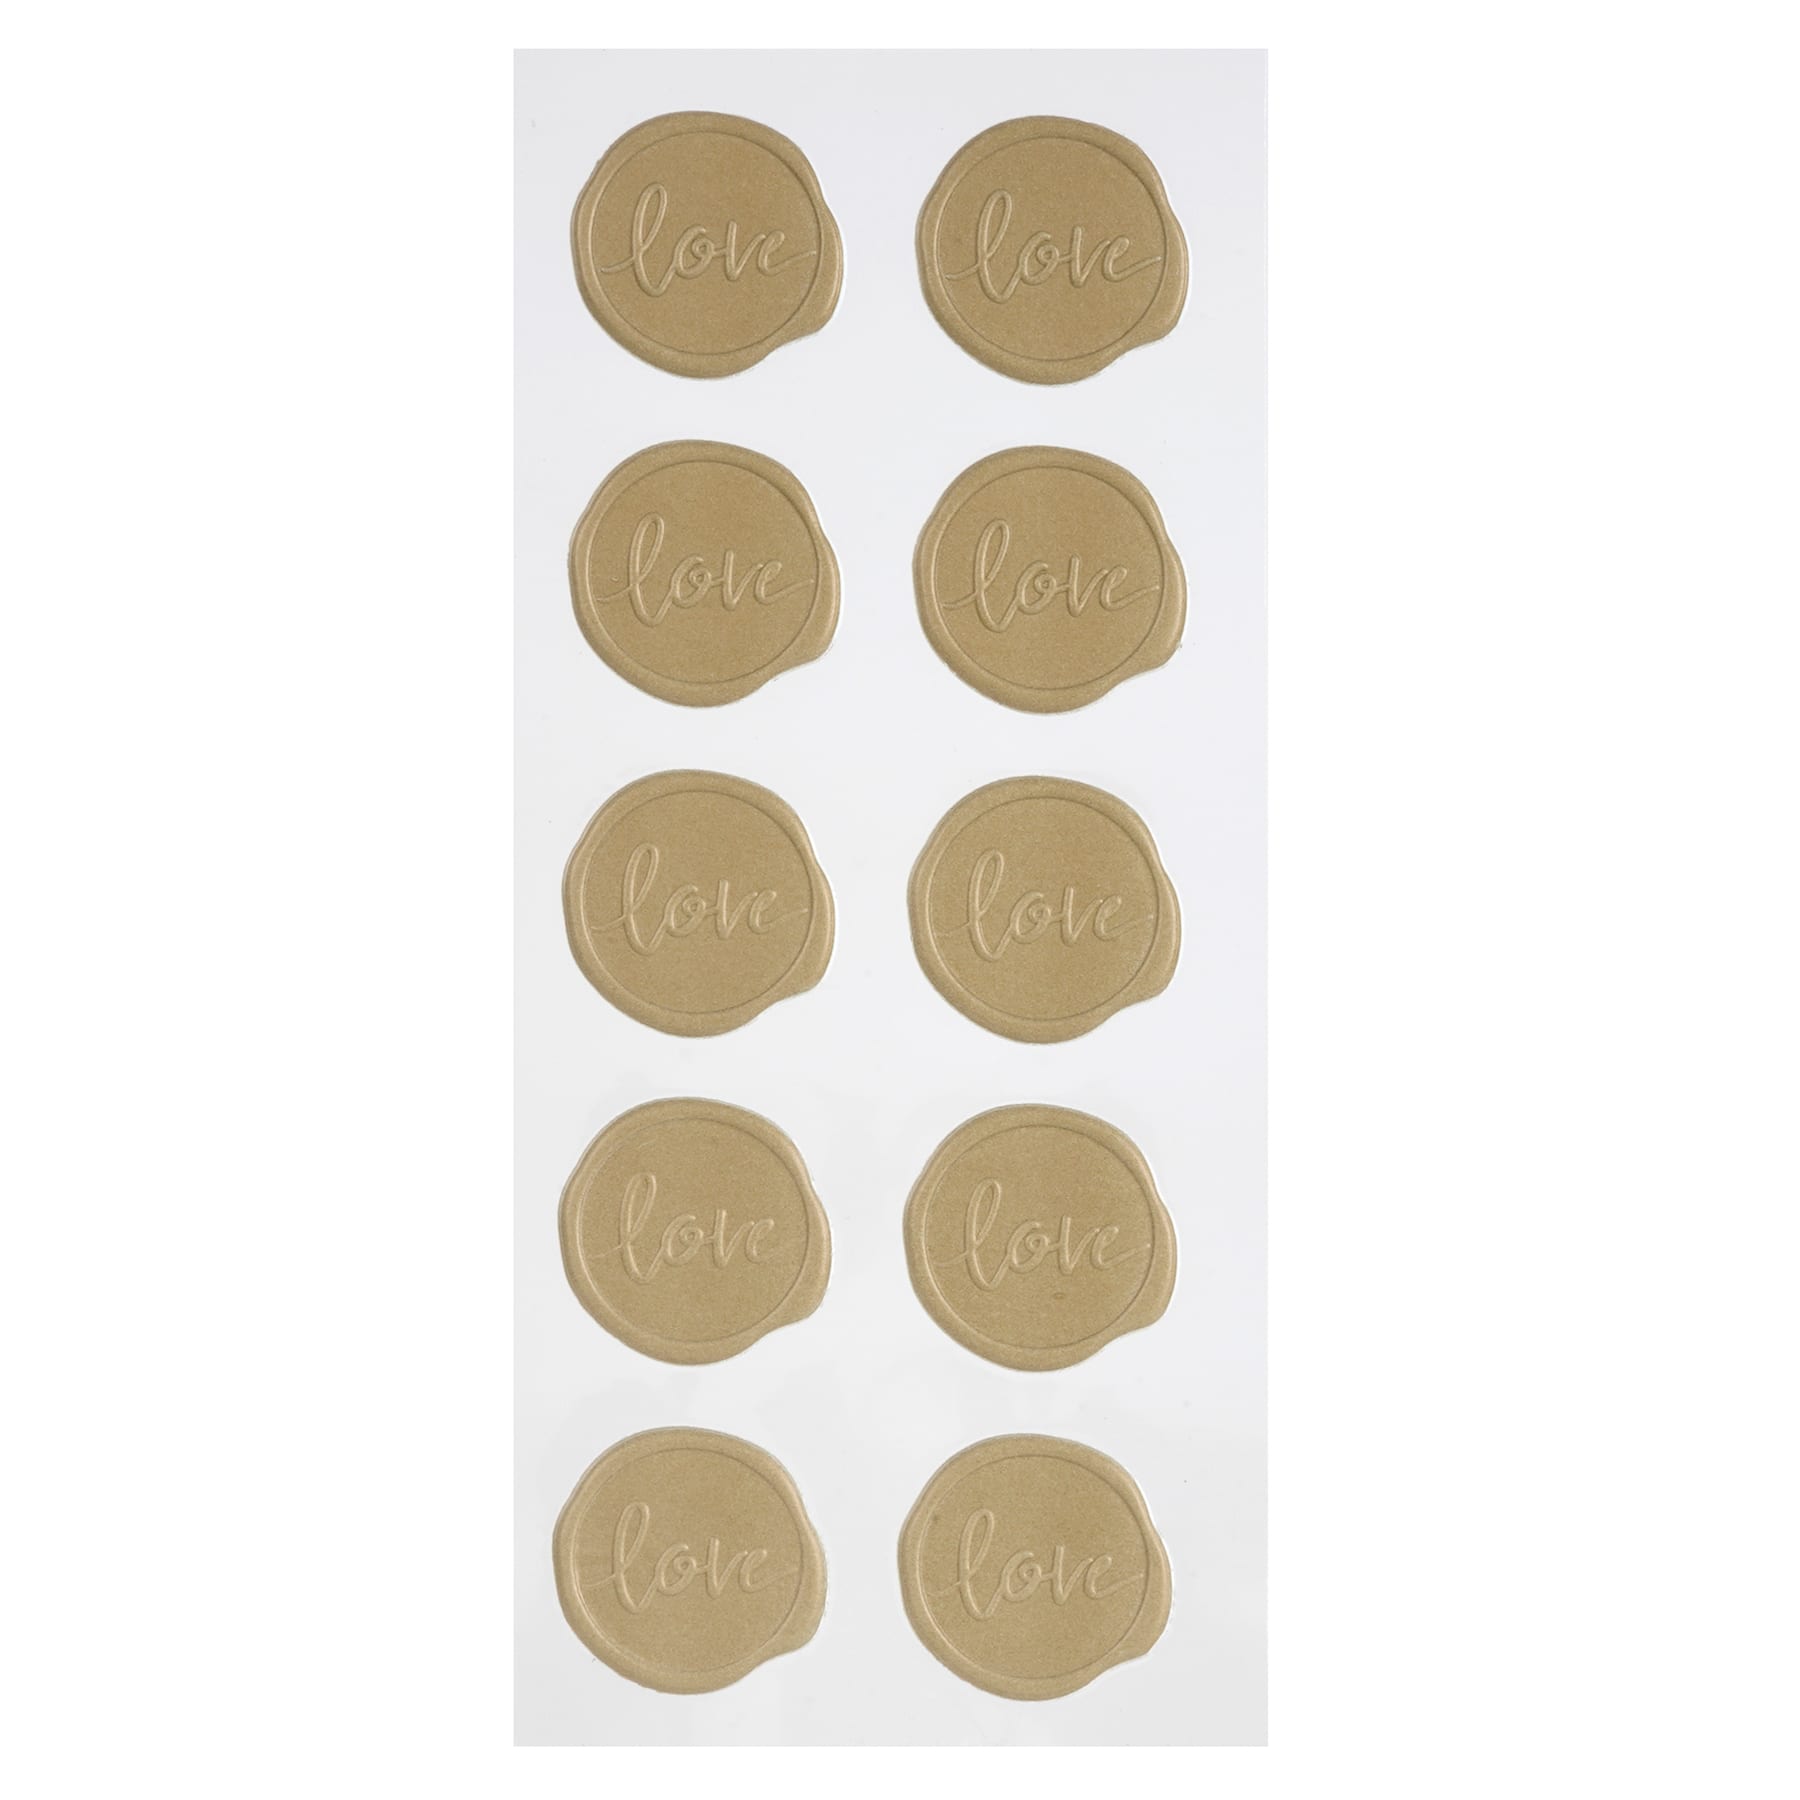 SUPERDANT 50 Pcs Mr & Mrs Wax Seal Stickers Vintage Gold Envelope Seals 3cm  Round Seal Adhesive Sticker Wine Label for Sealing Wedding Invitations